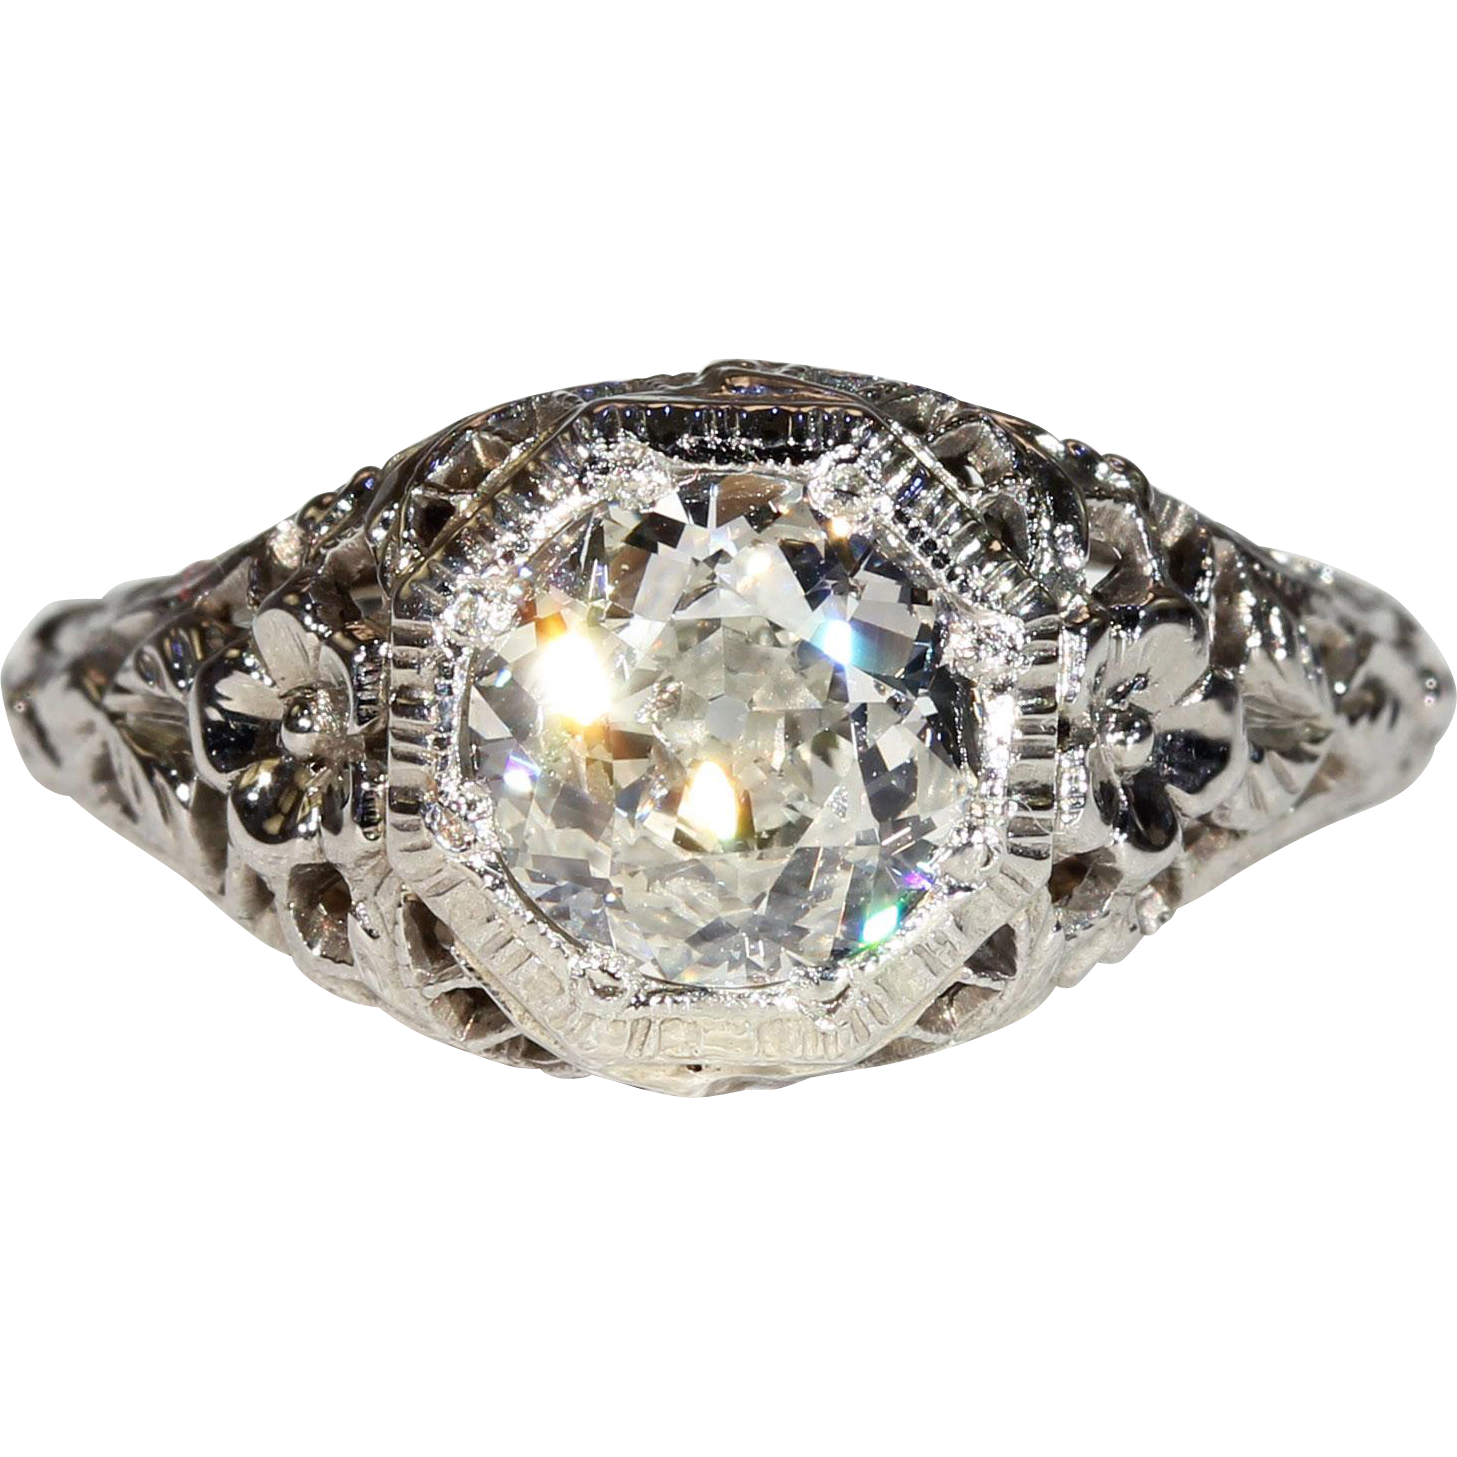 Vintage Art Deco Diamond Solitaire Ring 1.02ct